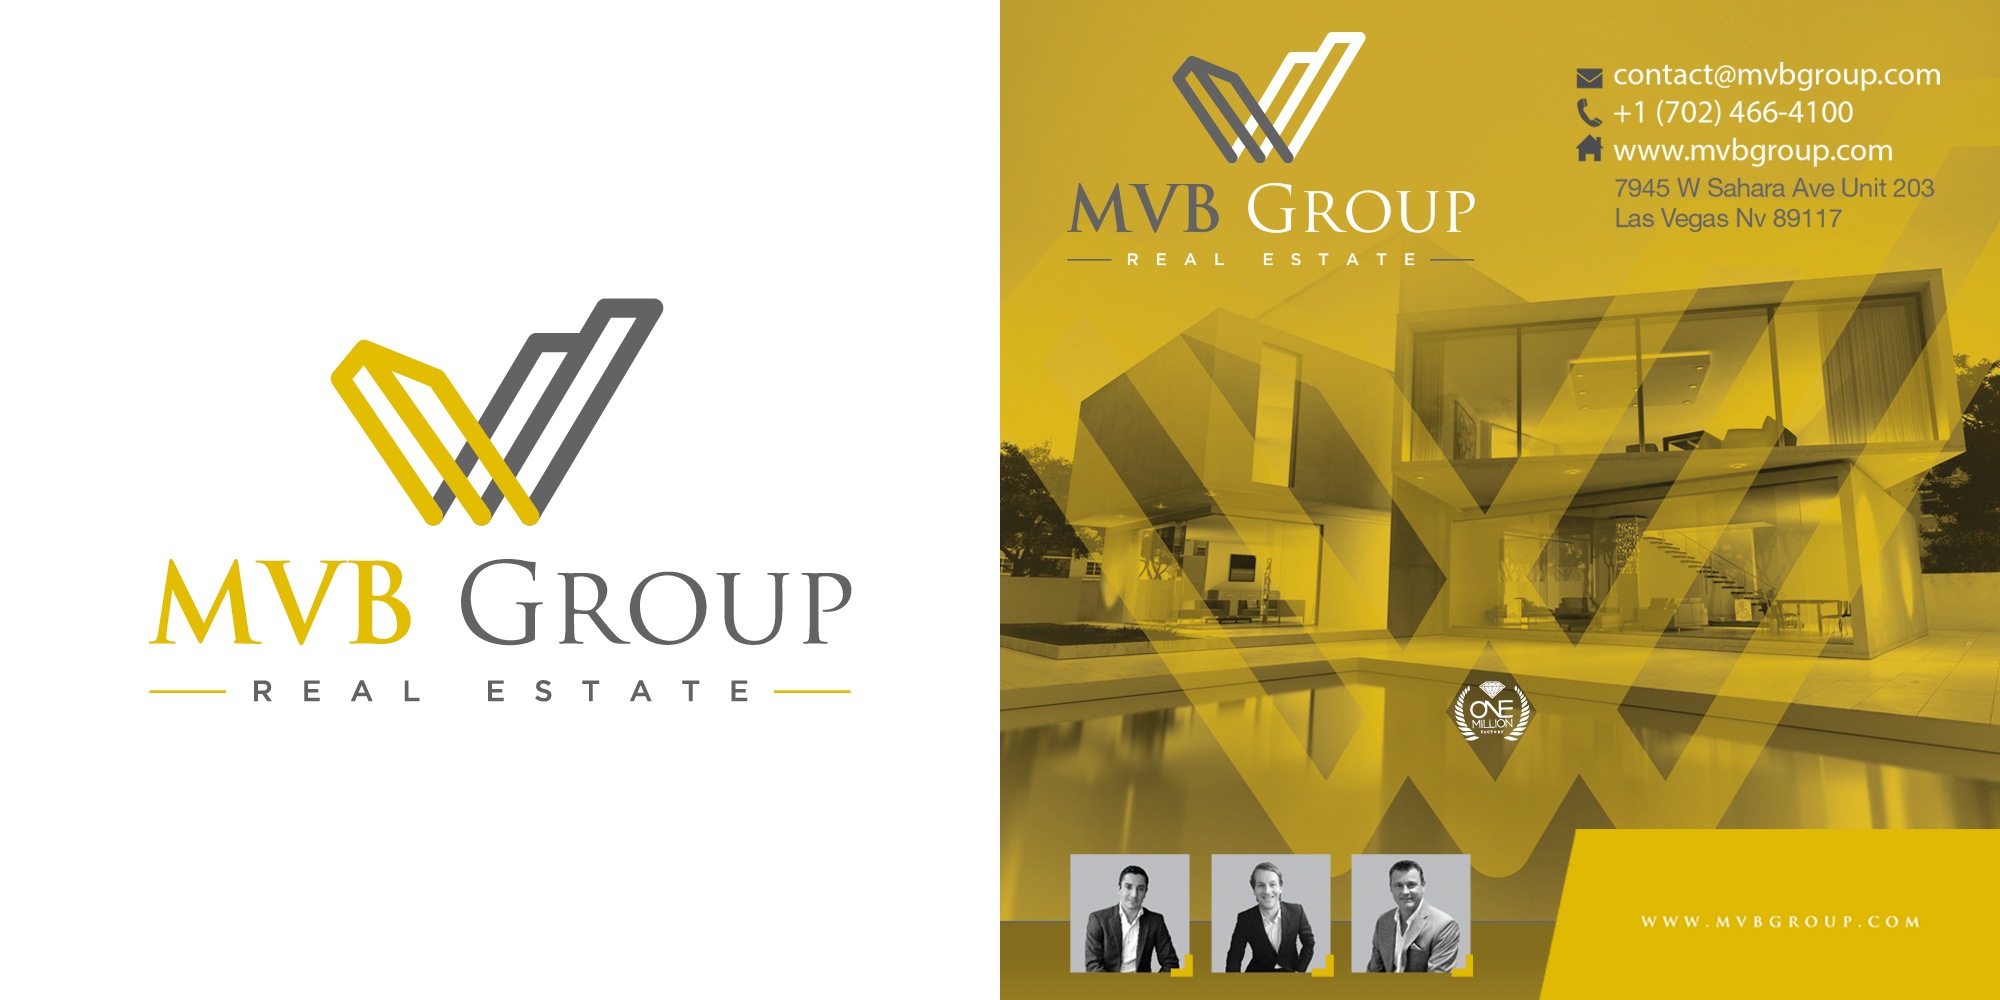 MVB Group   Real Estate   Las Vegas   Logo By One Million Factory